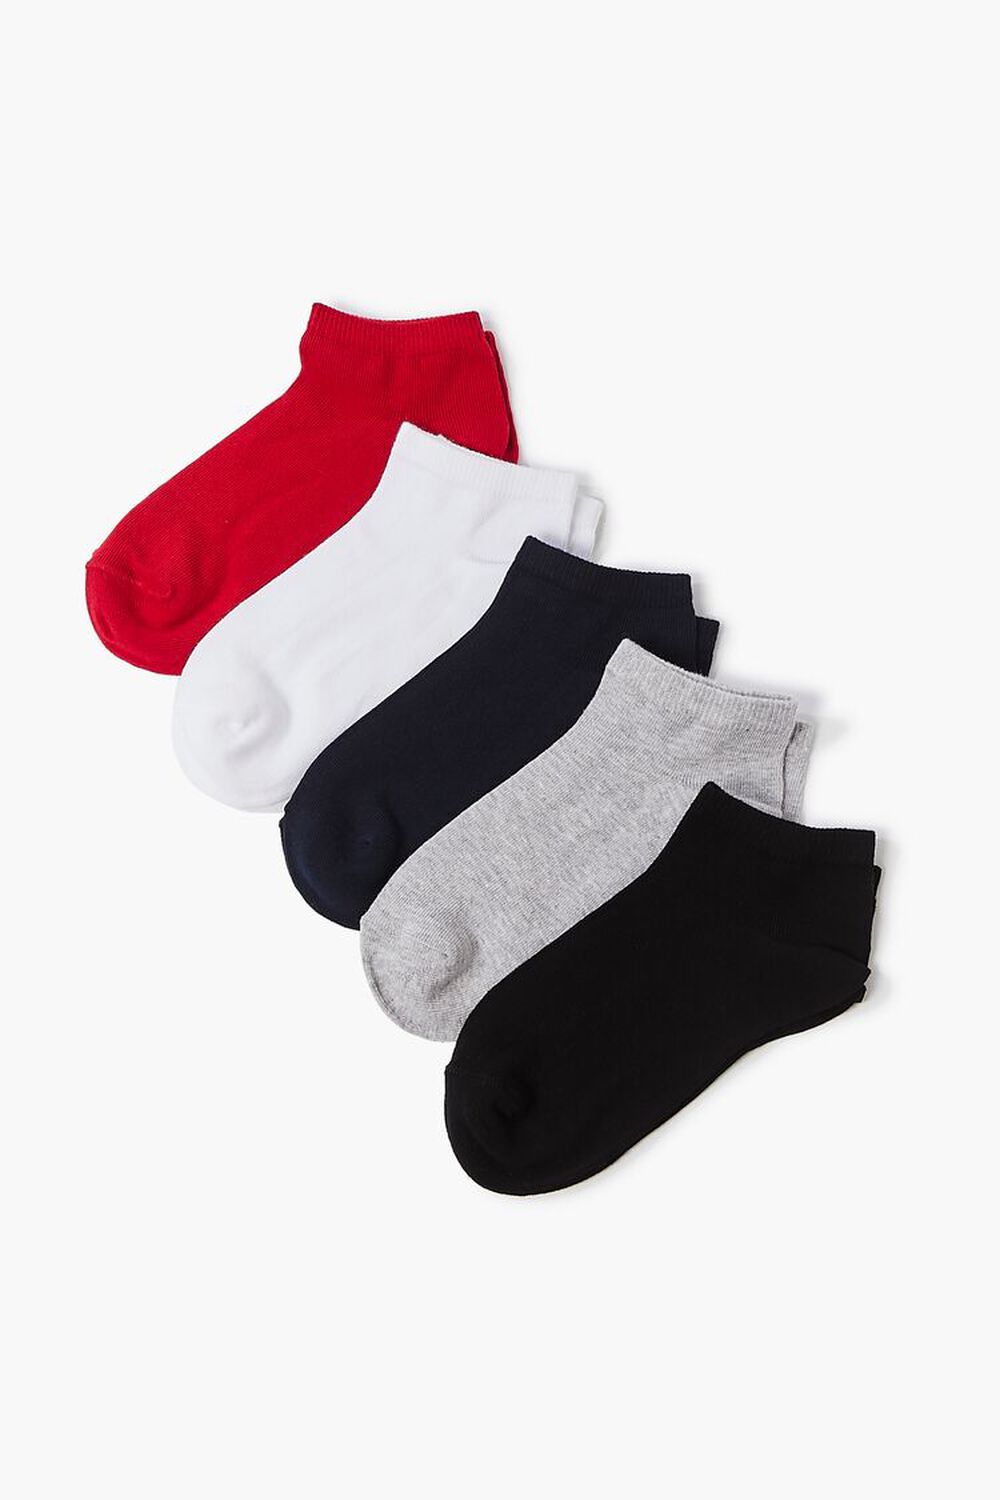 RED/NAVY Ankle Sock Set - 5 pack, image 1